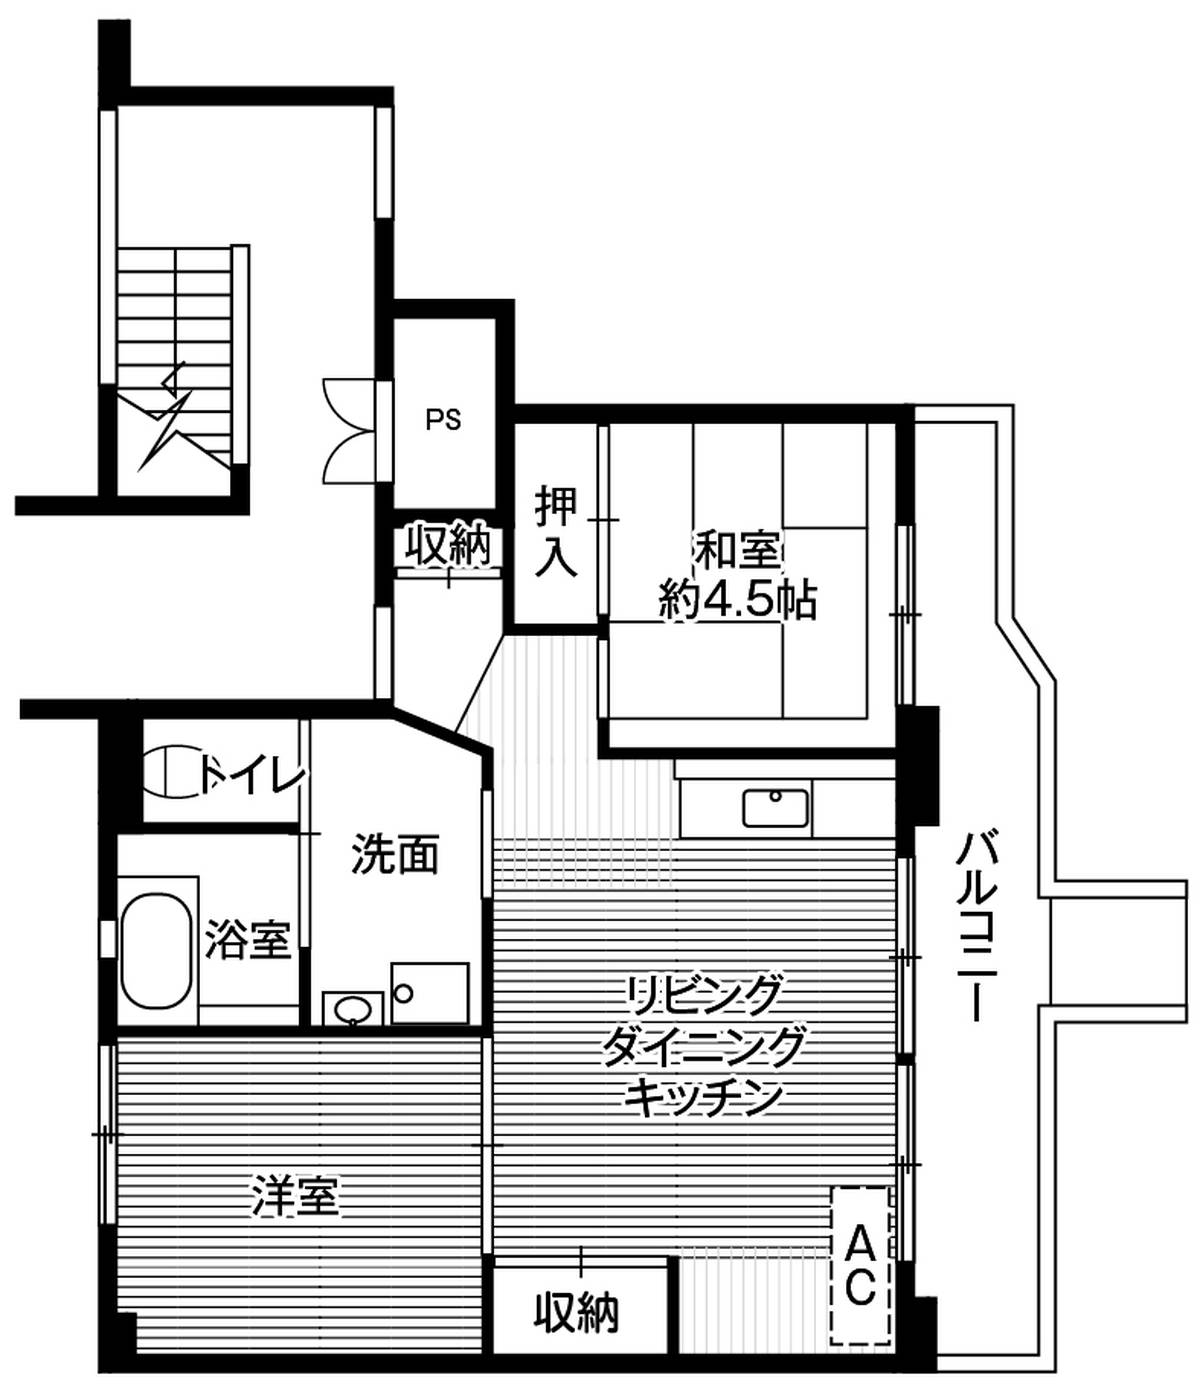 2LDK floorplan of Village House Wakakusa in Akita-shi